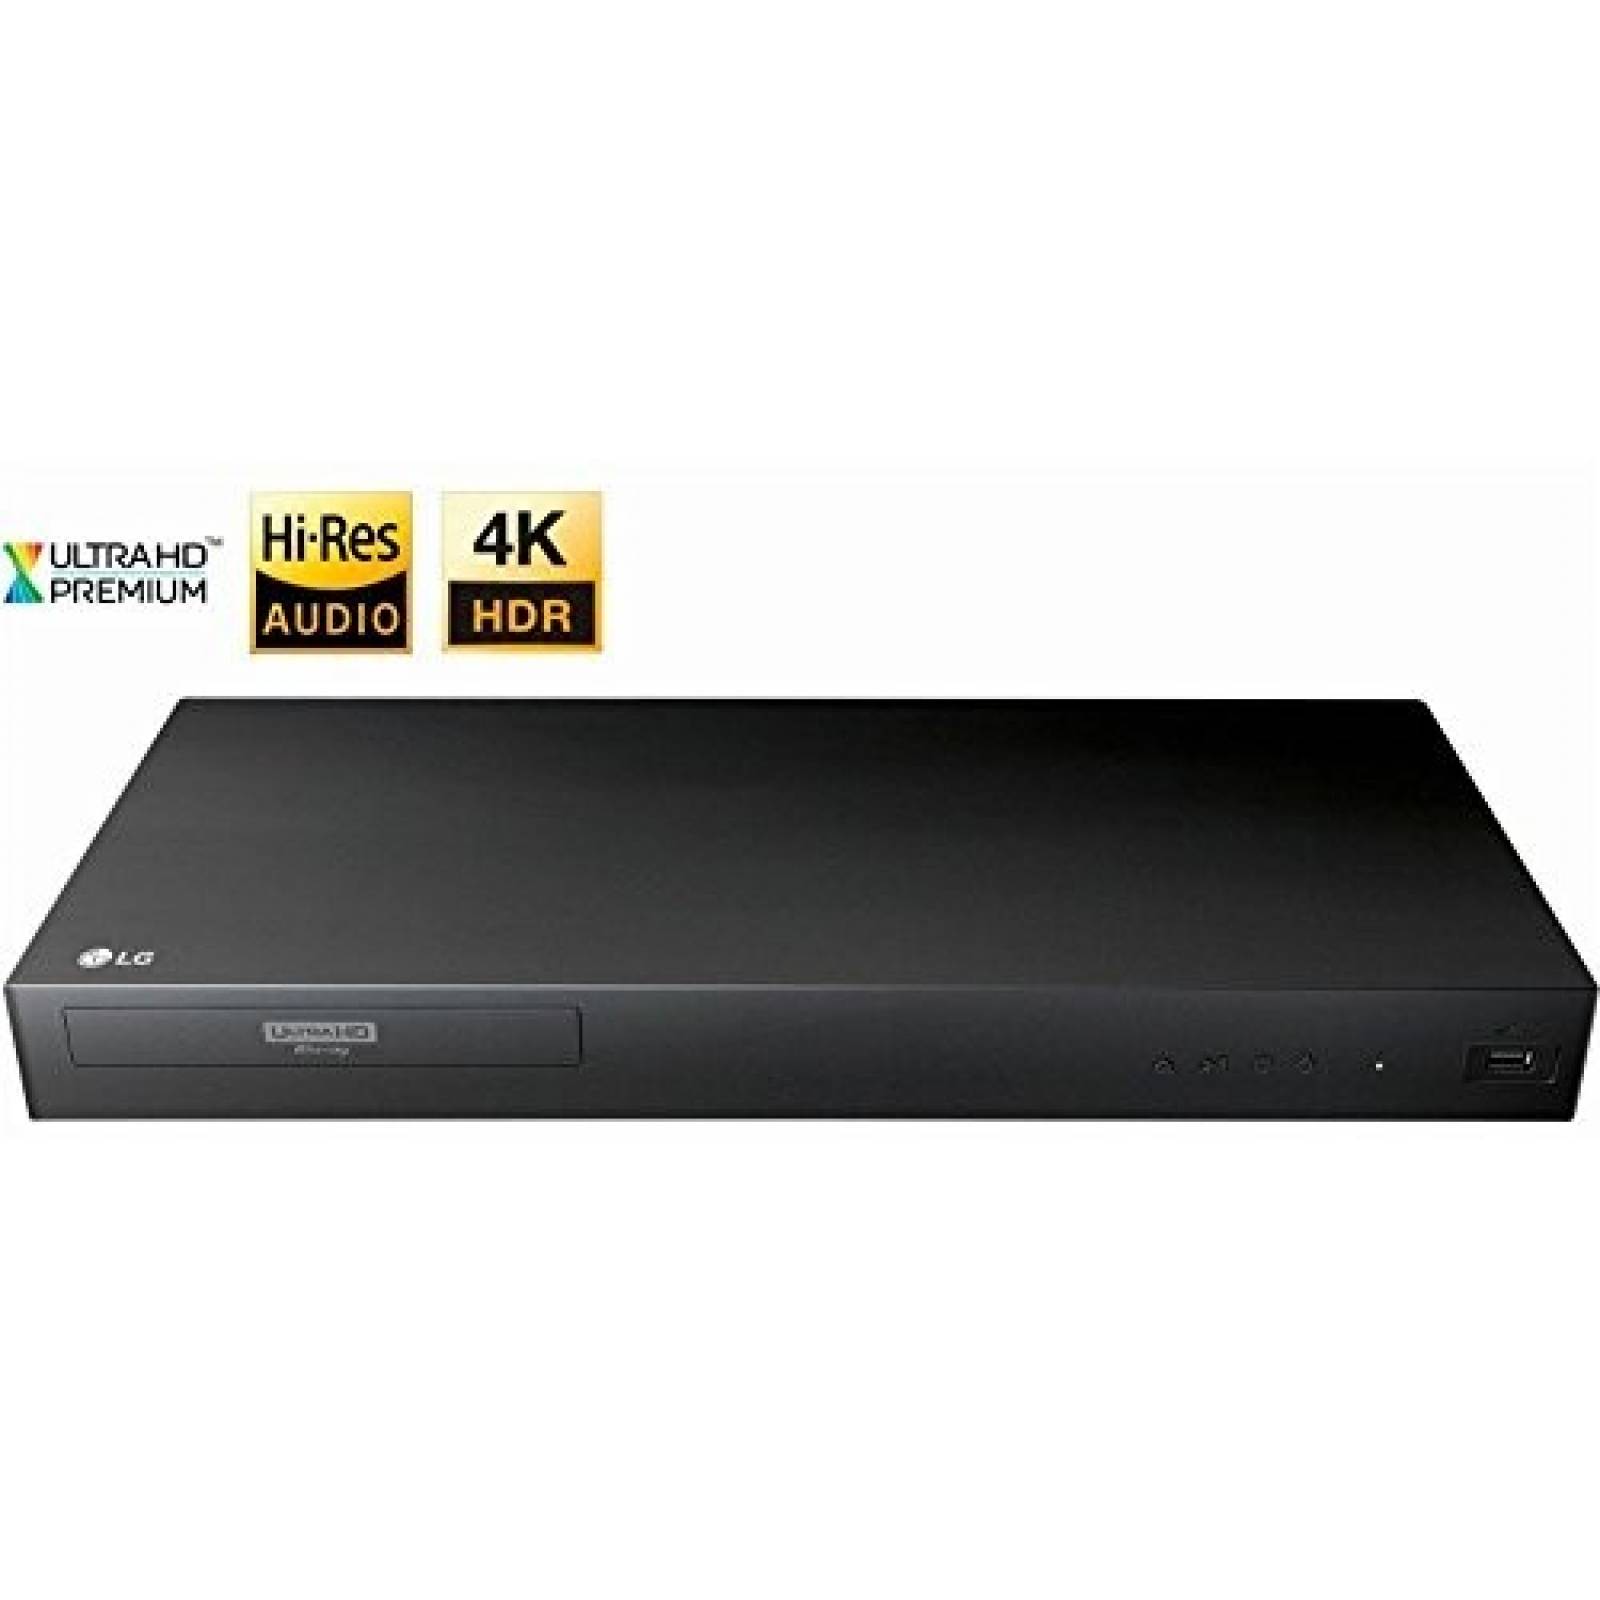 Reproductor de Blu-ray LG up870 Ultra HD 4K Multi región